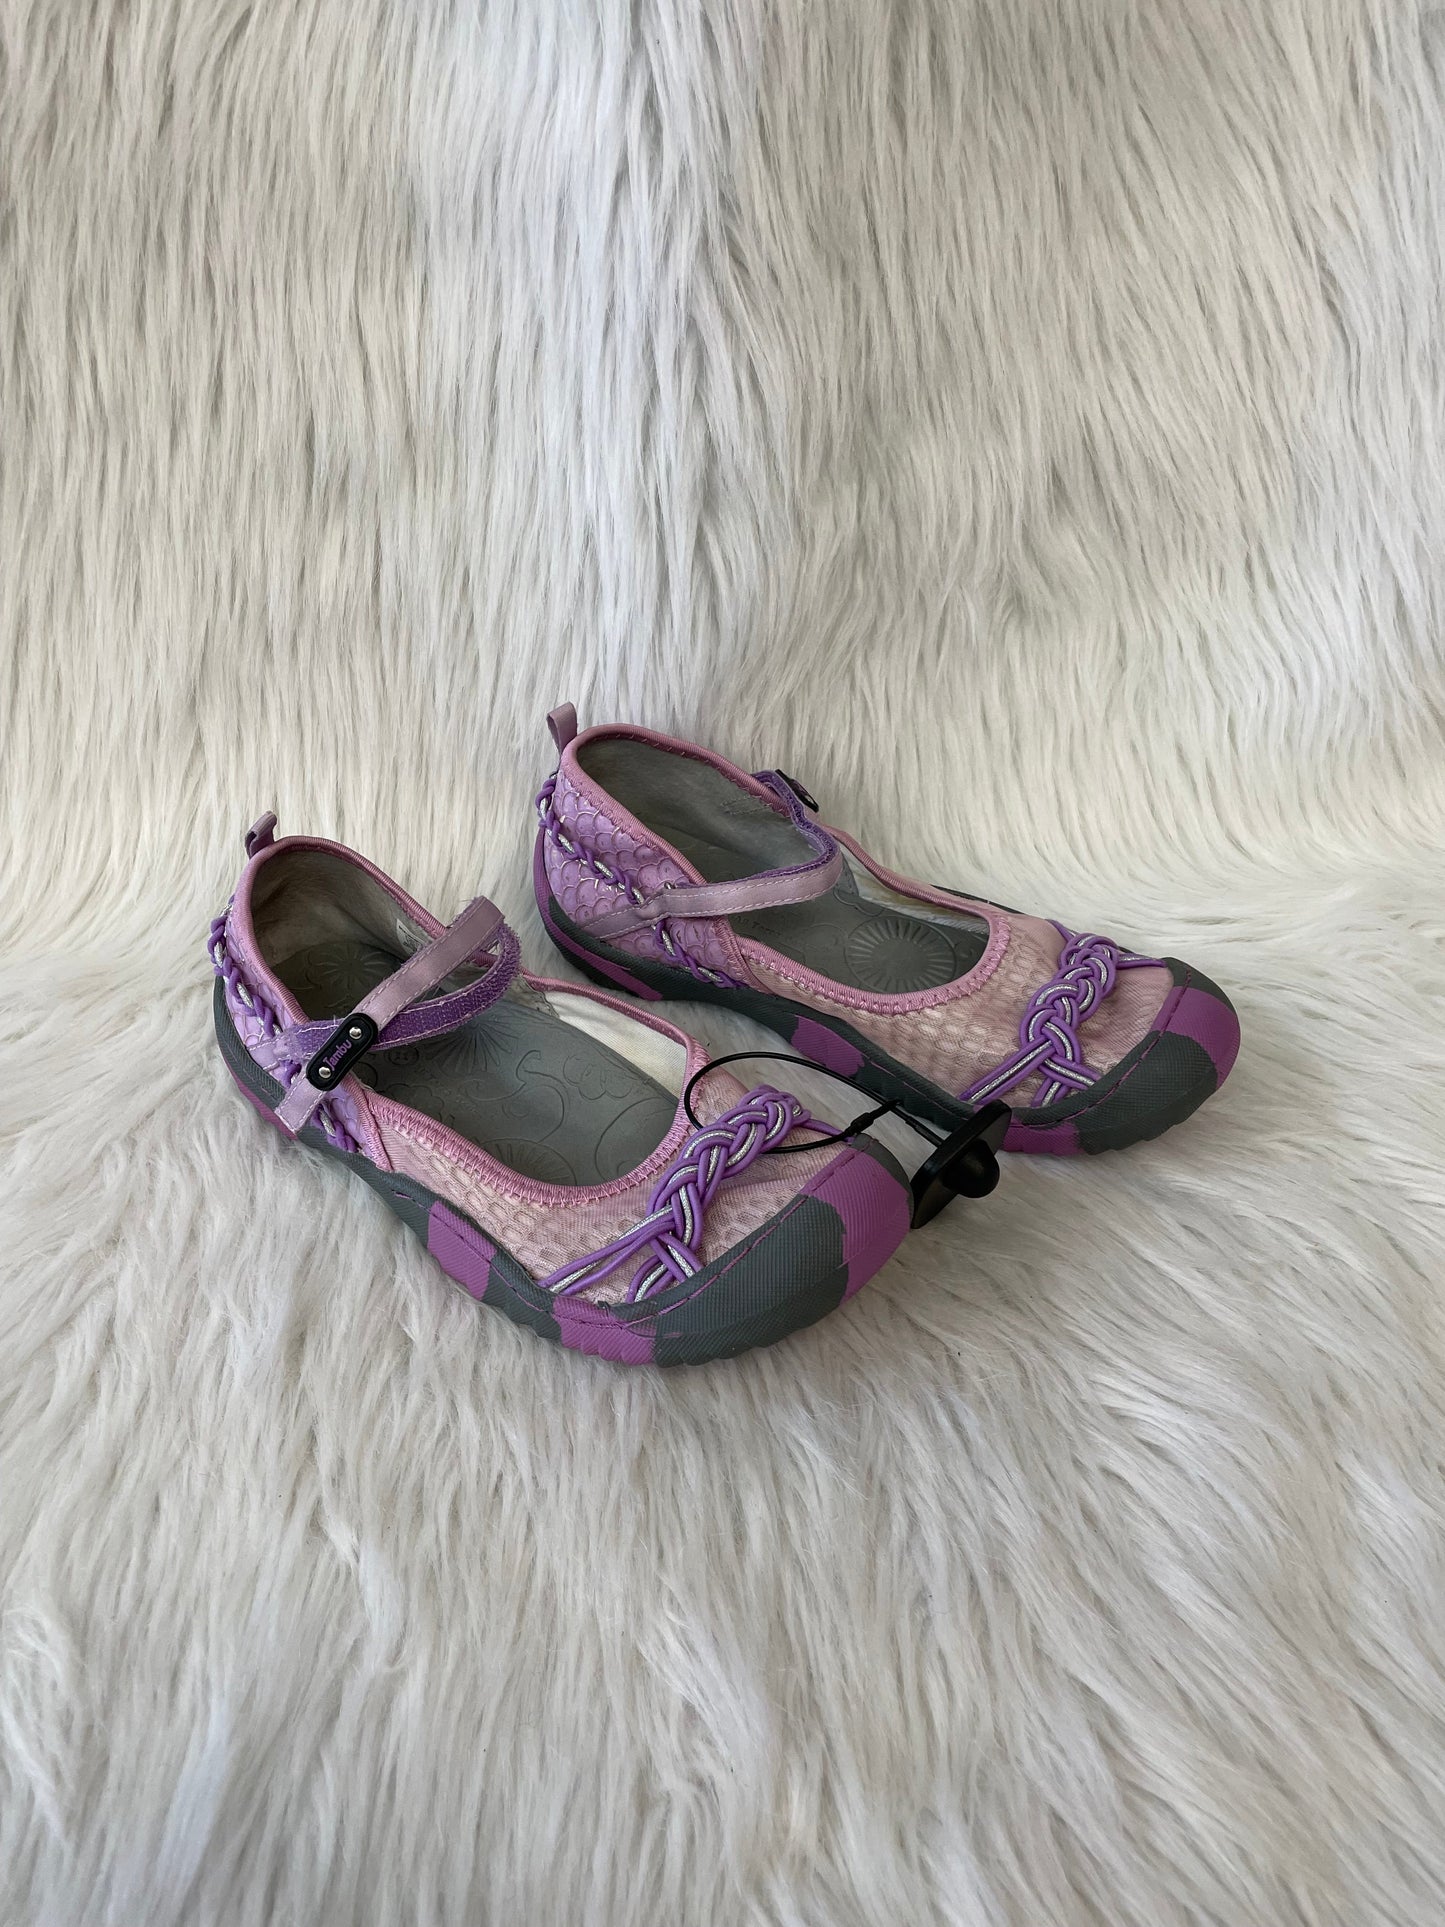 Grey & Pink Shoes Flats Jambu, Size 6